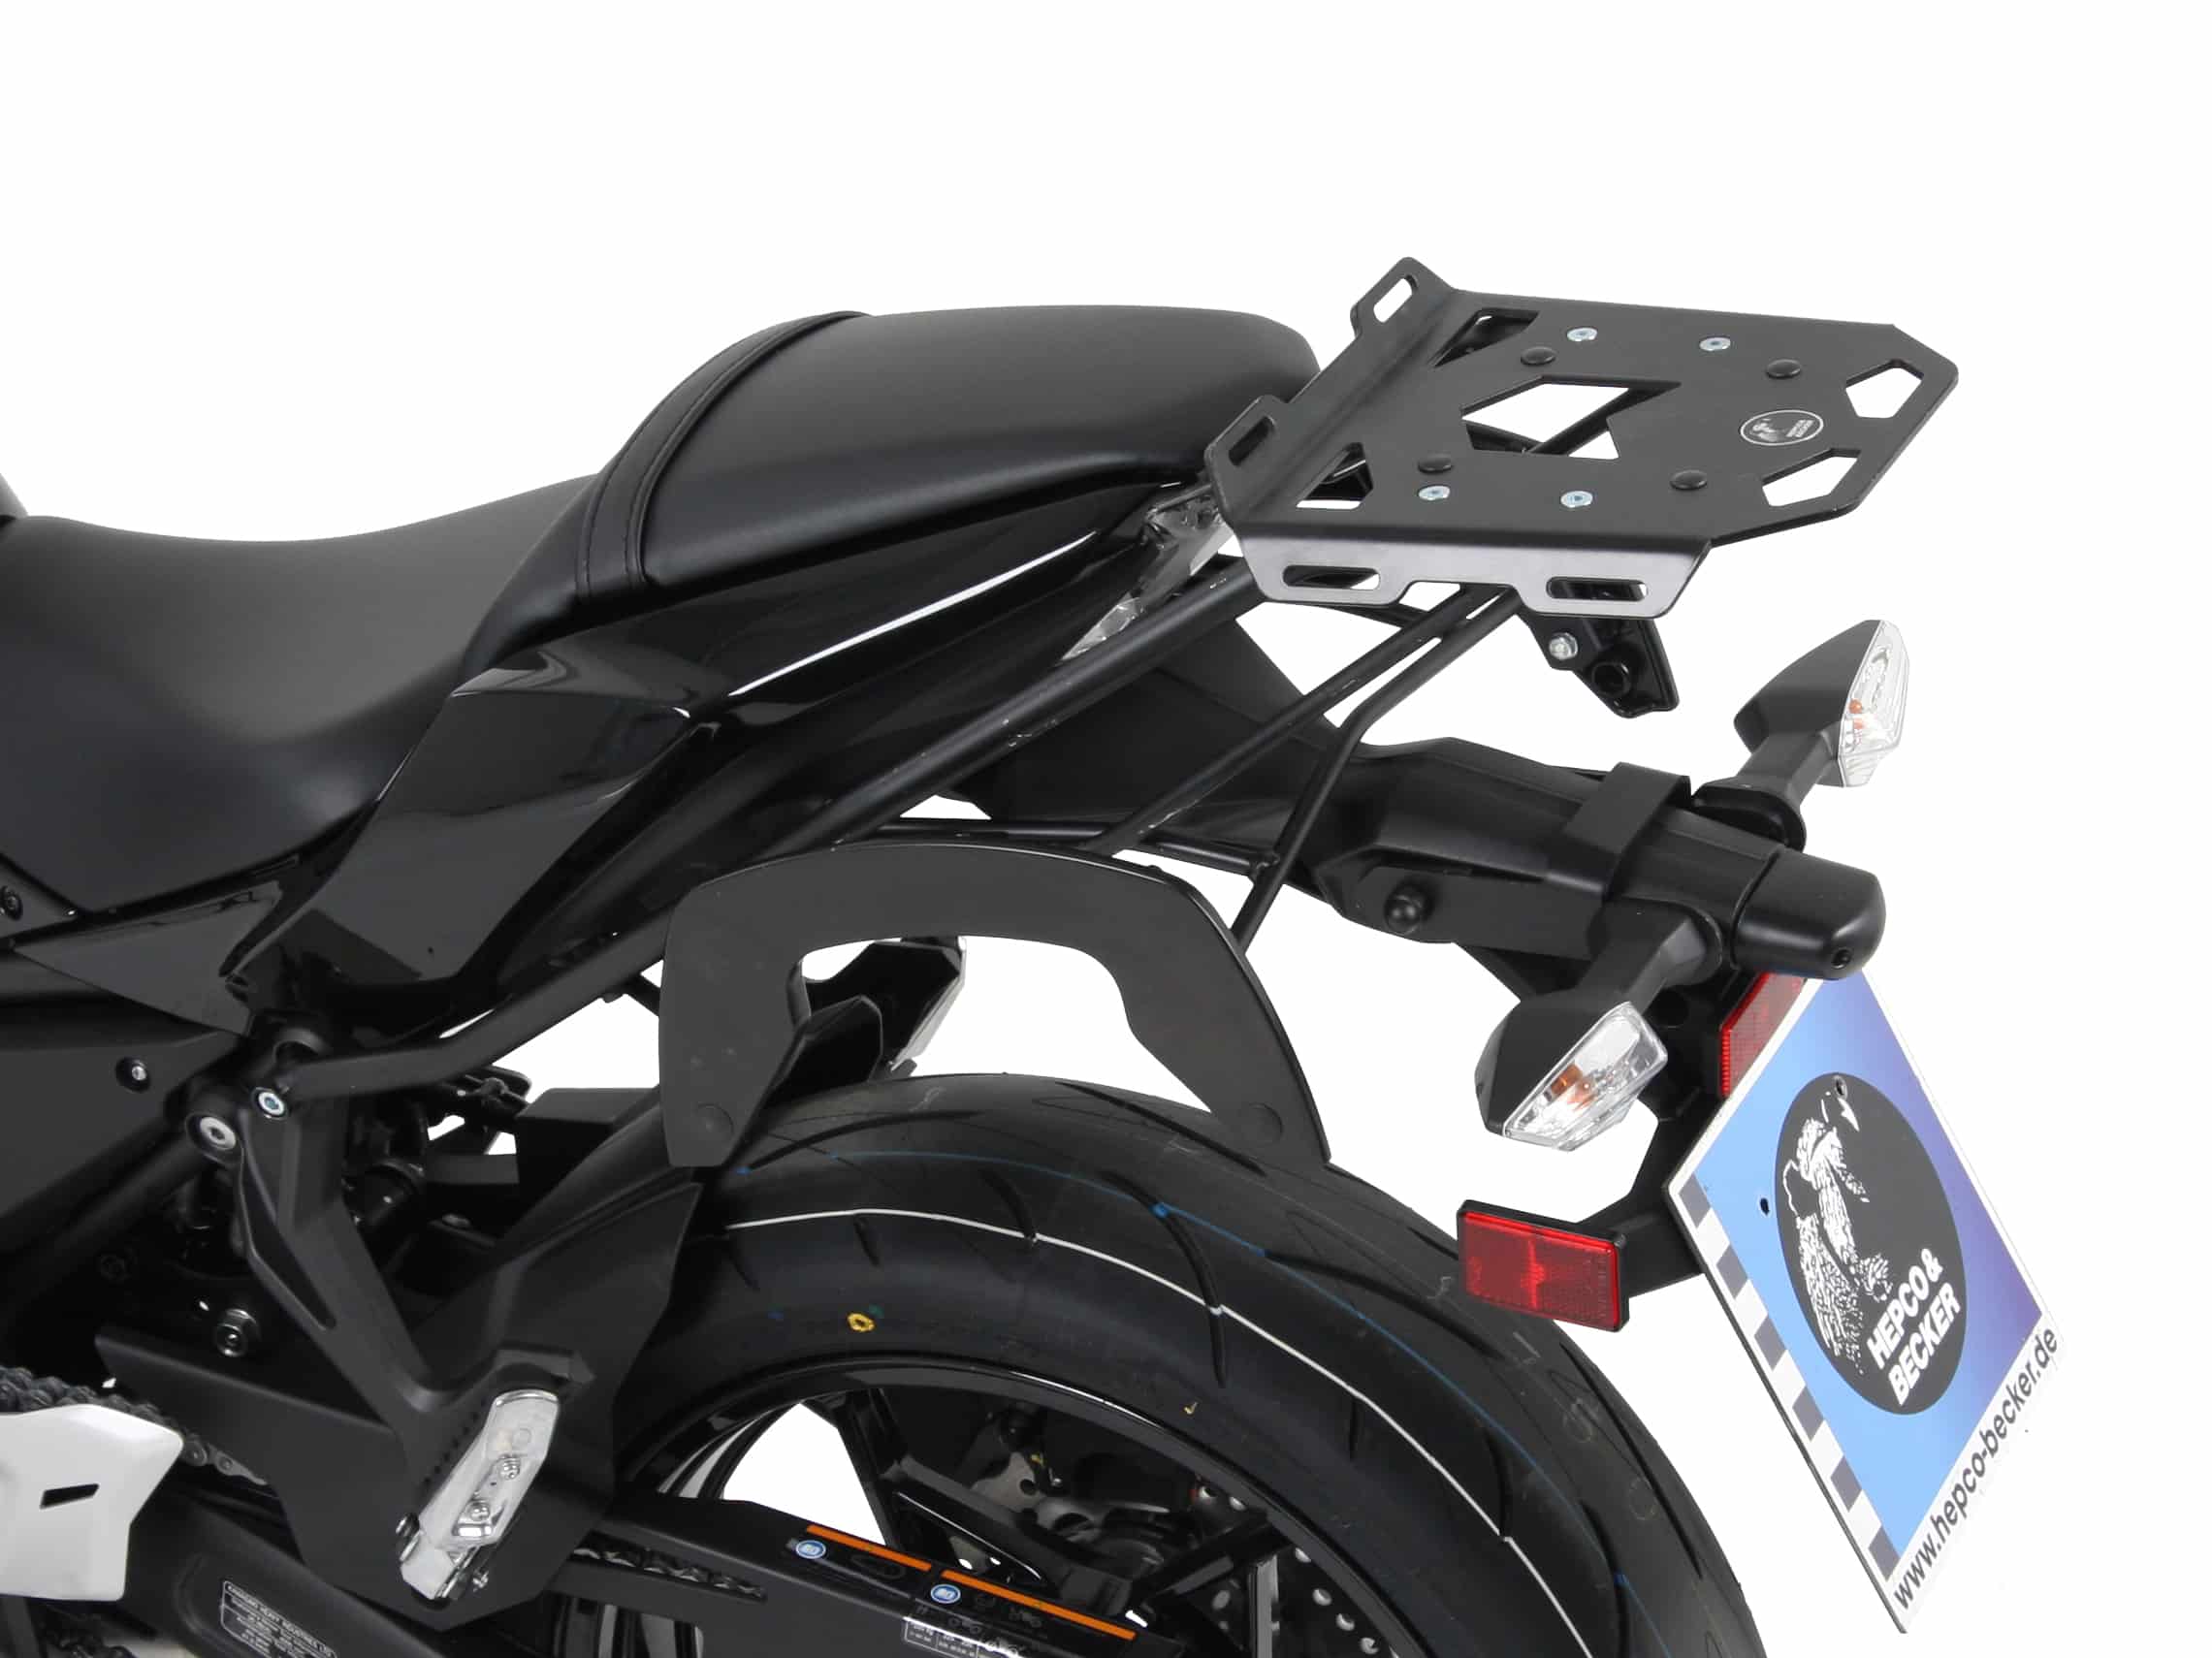 Minirack Softgepäck-Heckträger schwarz für Kawasaki Ninja 650 (2017-)